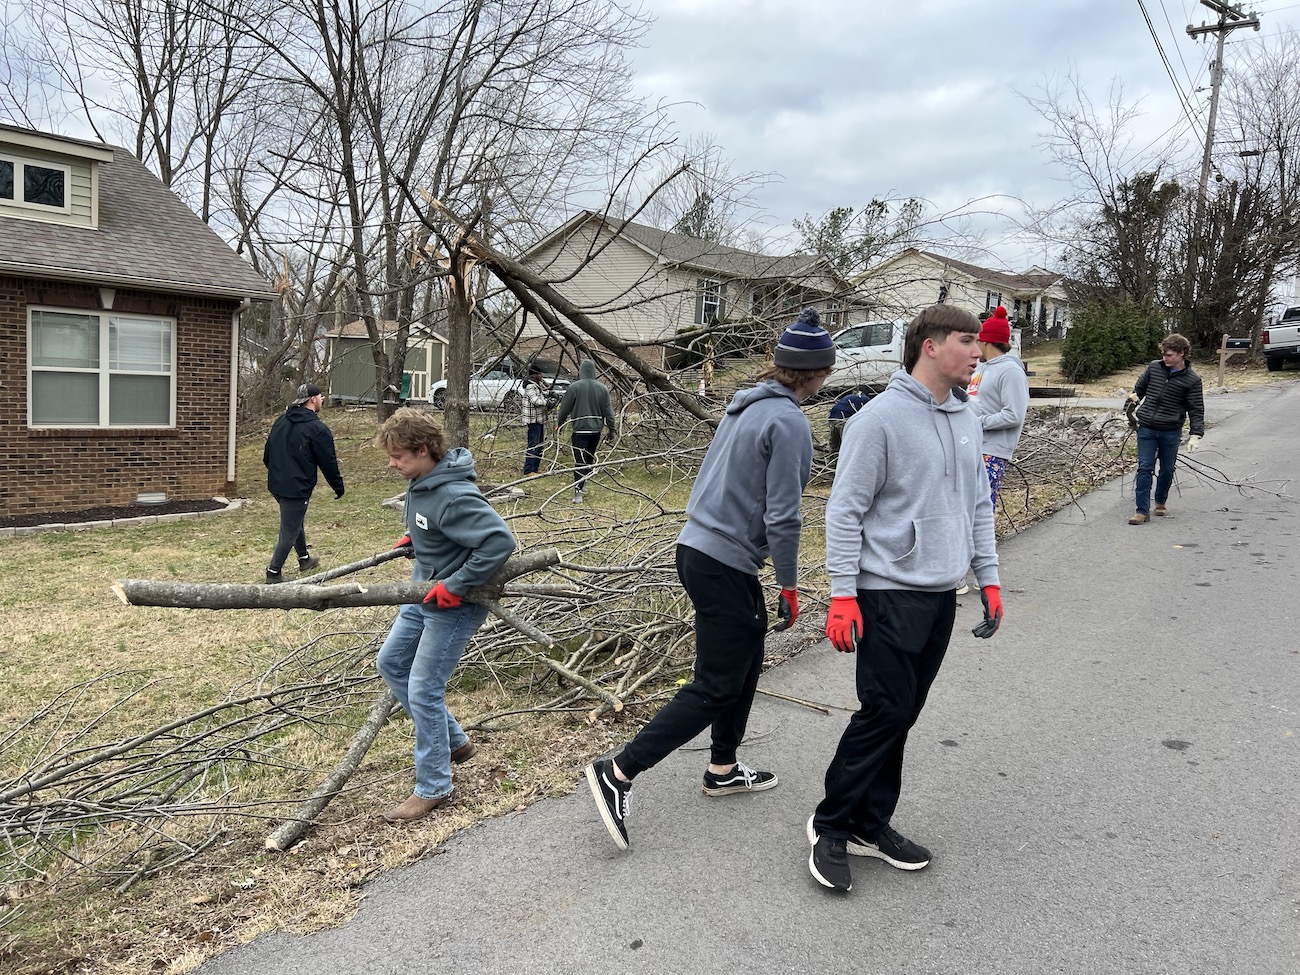 The Austin Peay baseball team helps clean debris after a tornado.